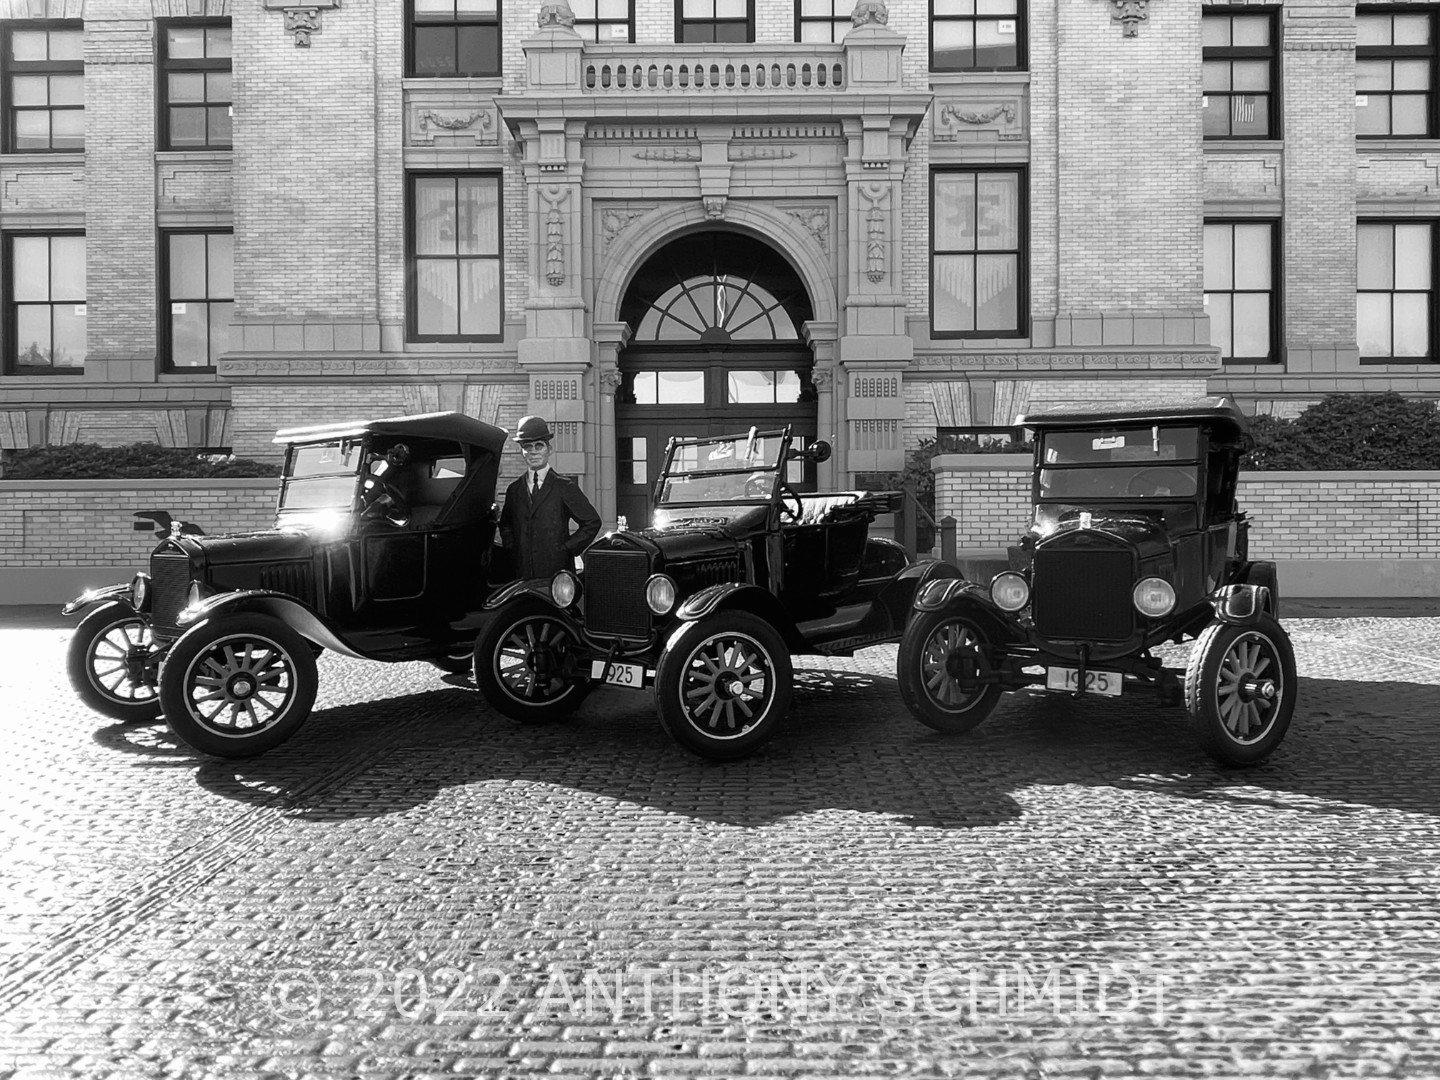 1925 Ford Model T at Everett High